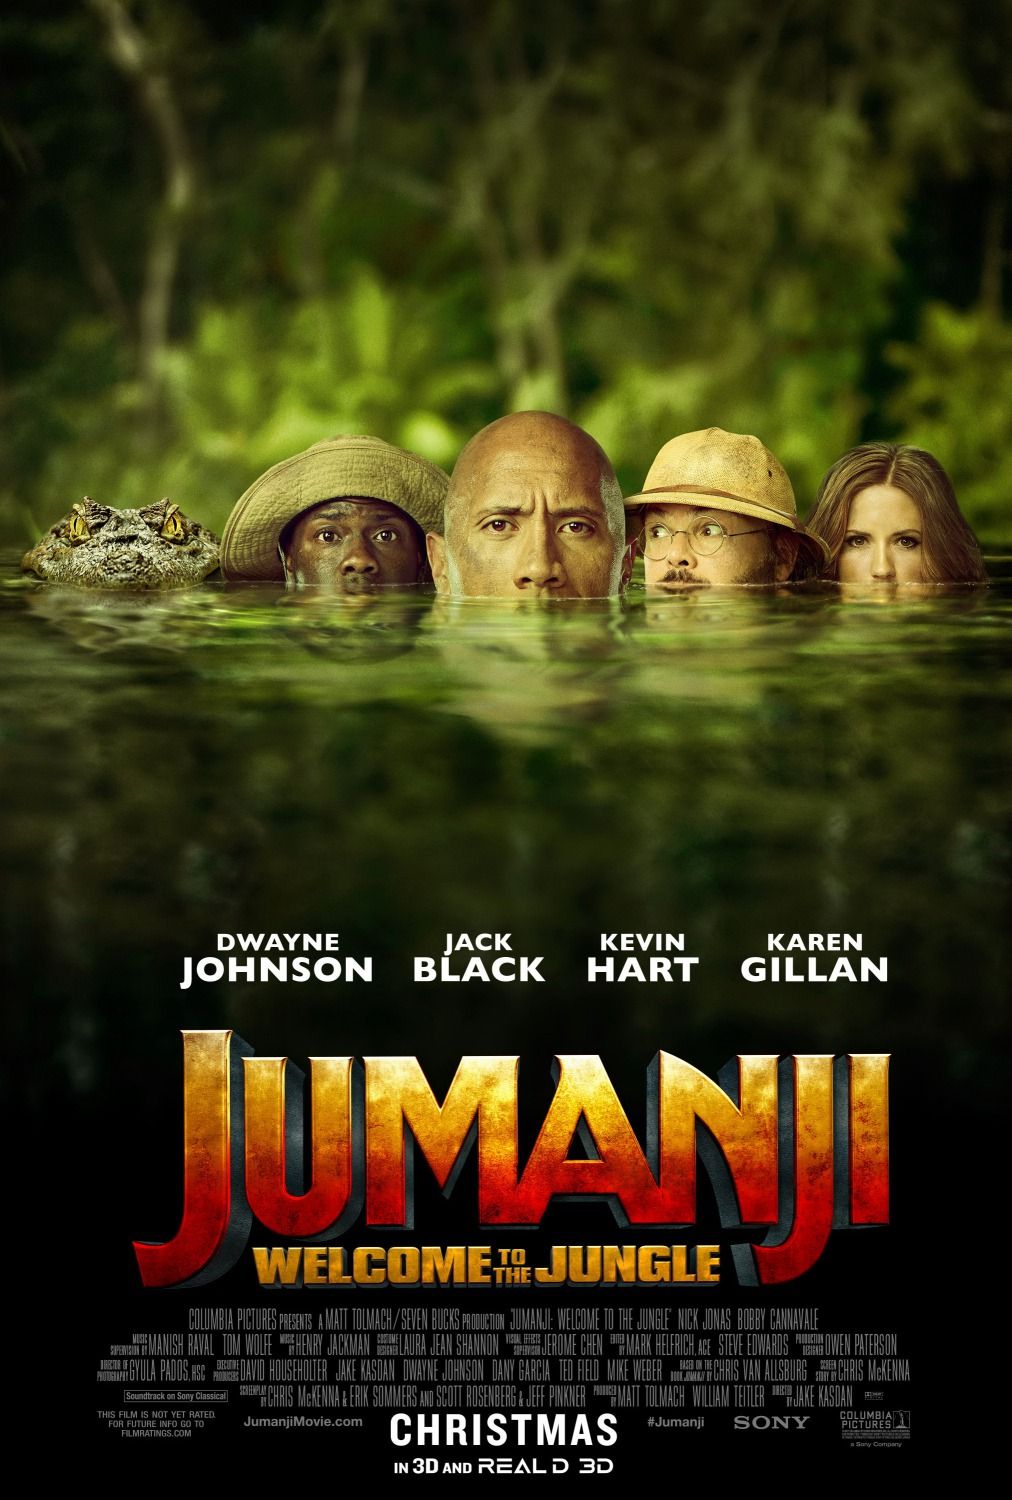 Jumanji Welcome to the Jungle Film Poster